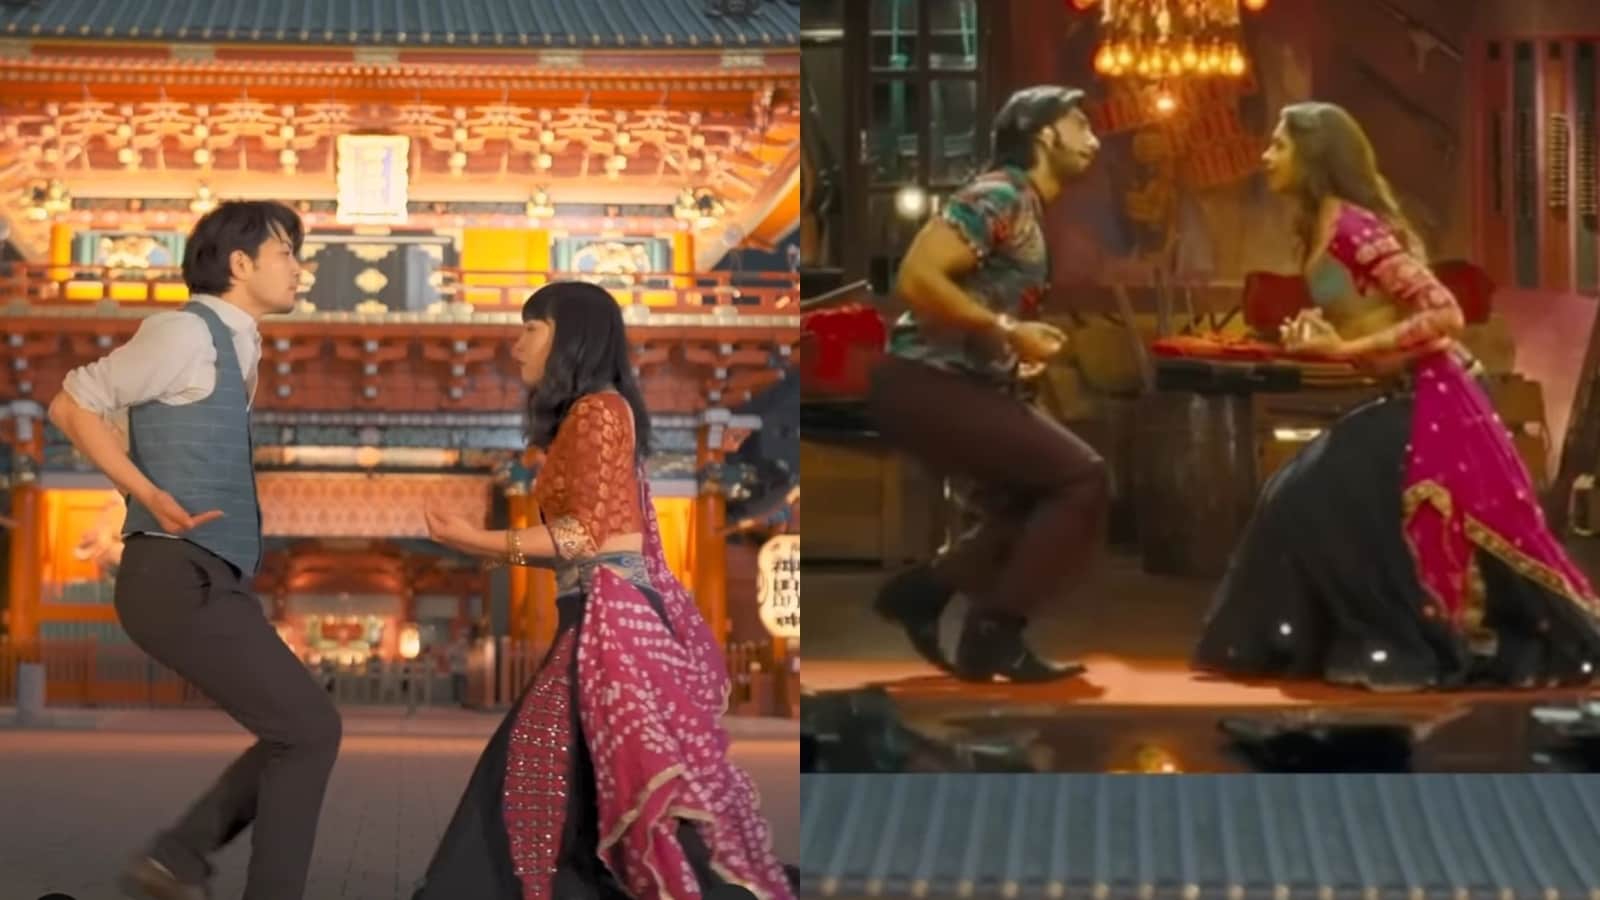 Japanese duo recreates Ranveer Singh, Deepika Padukone’s Goliyon Ki Raasleela Ram-Leela scene. Internet says ‘nailed it’